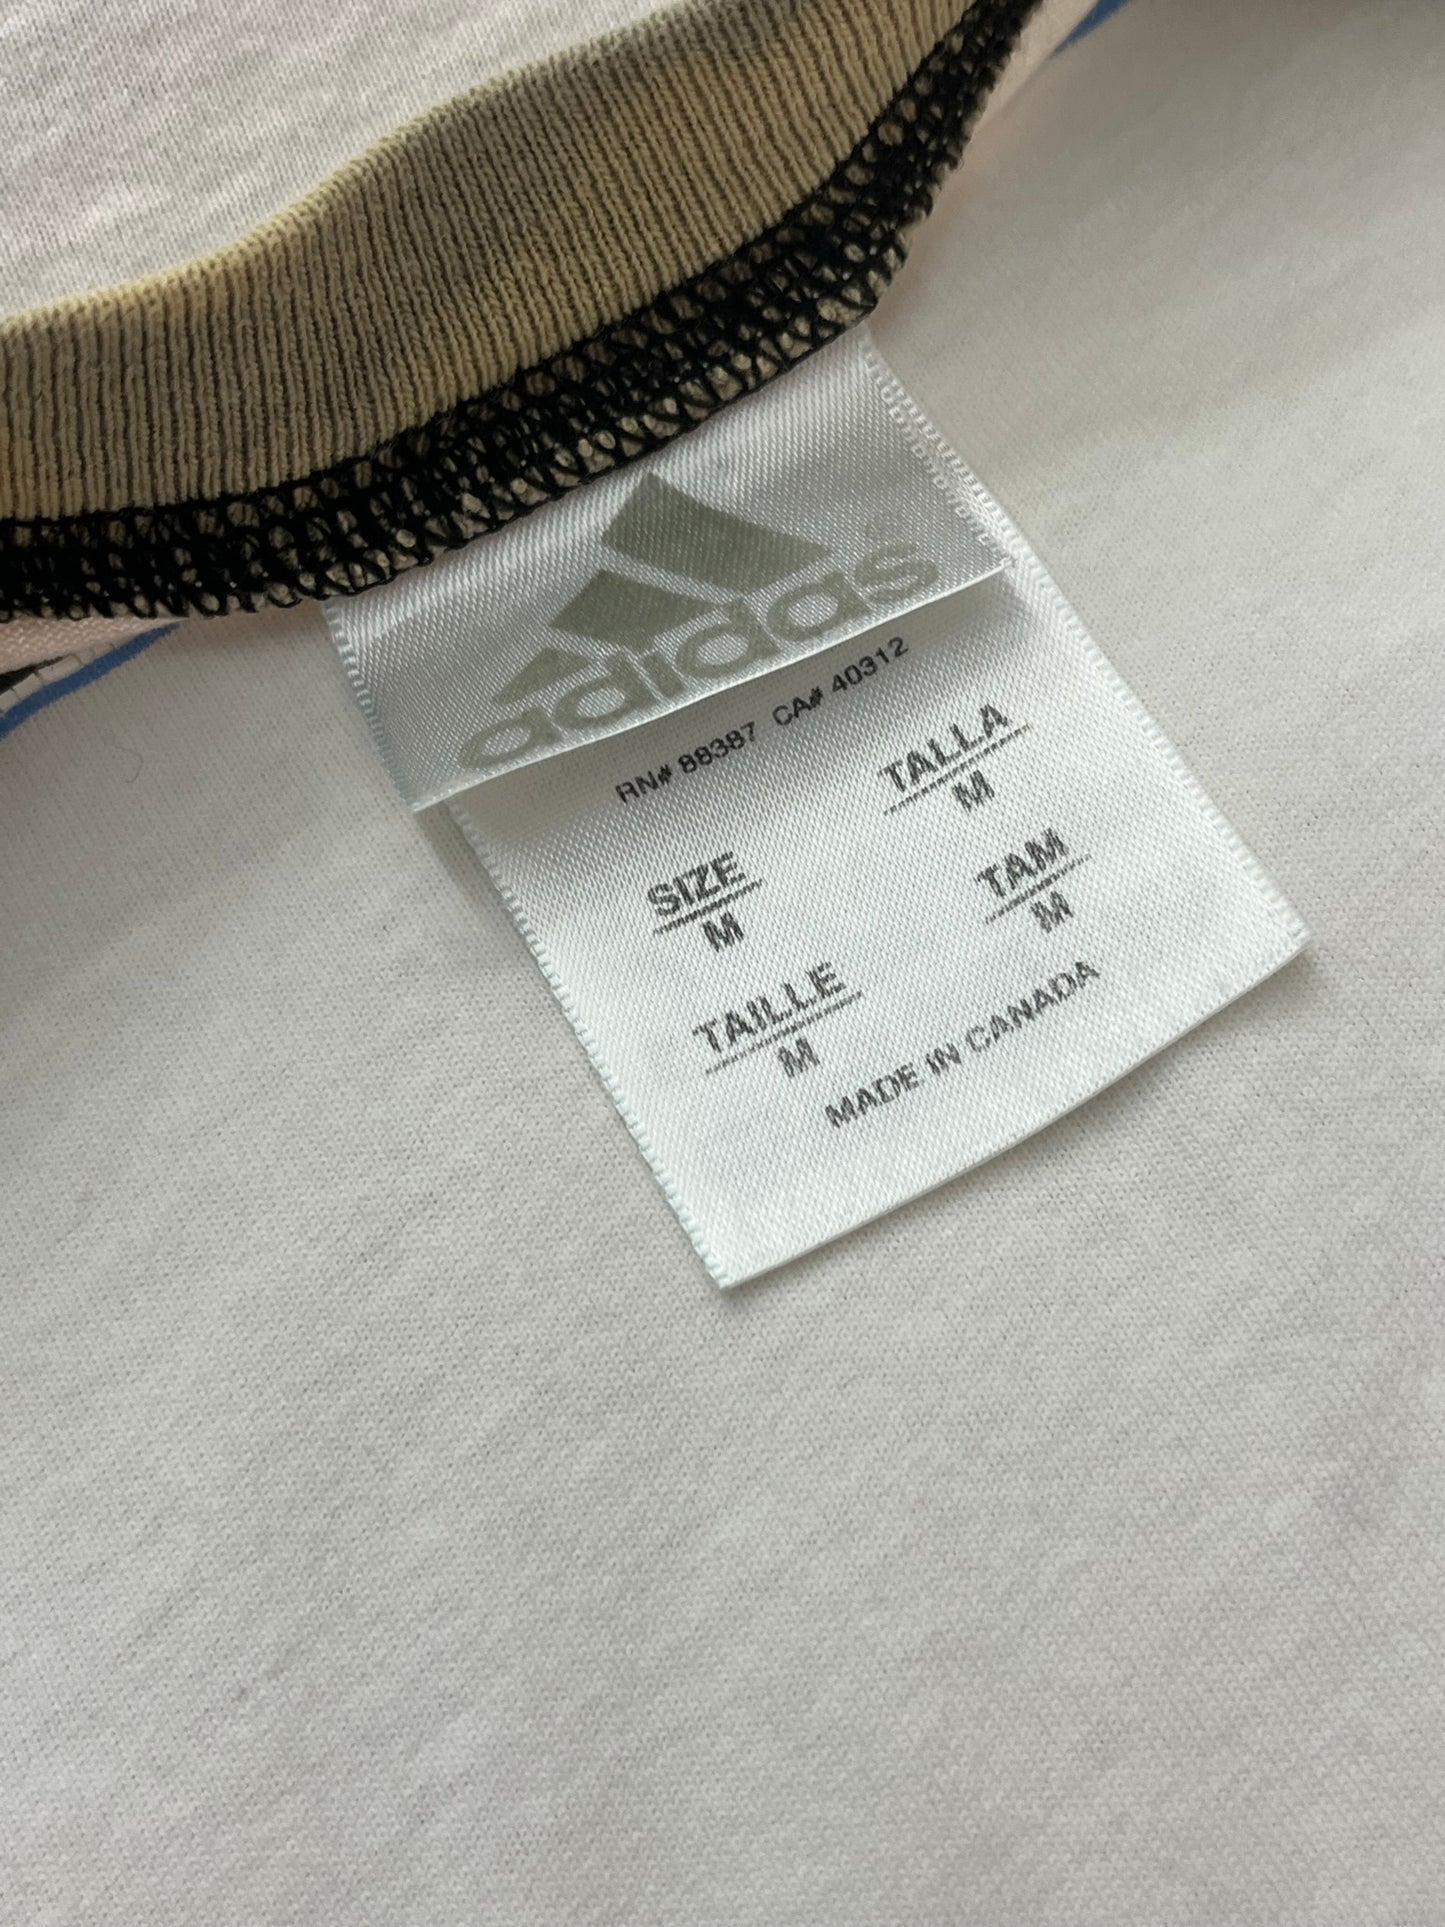 Vintage Adidas Logo Tee Size M